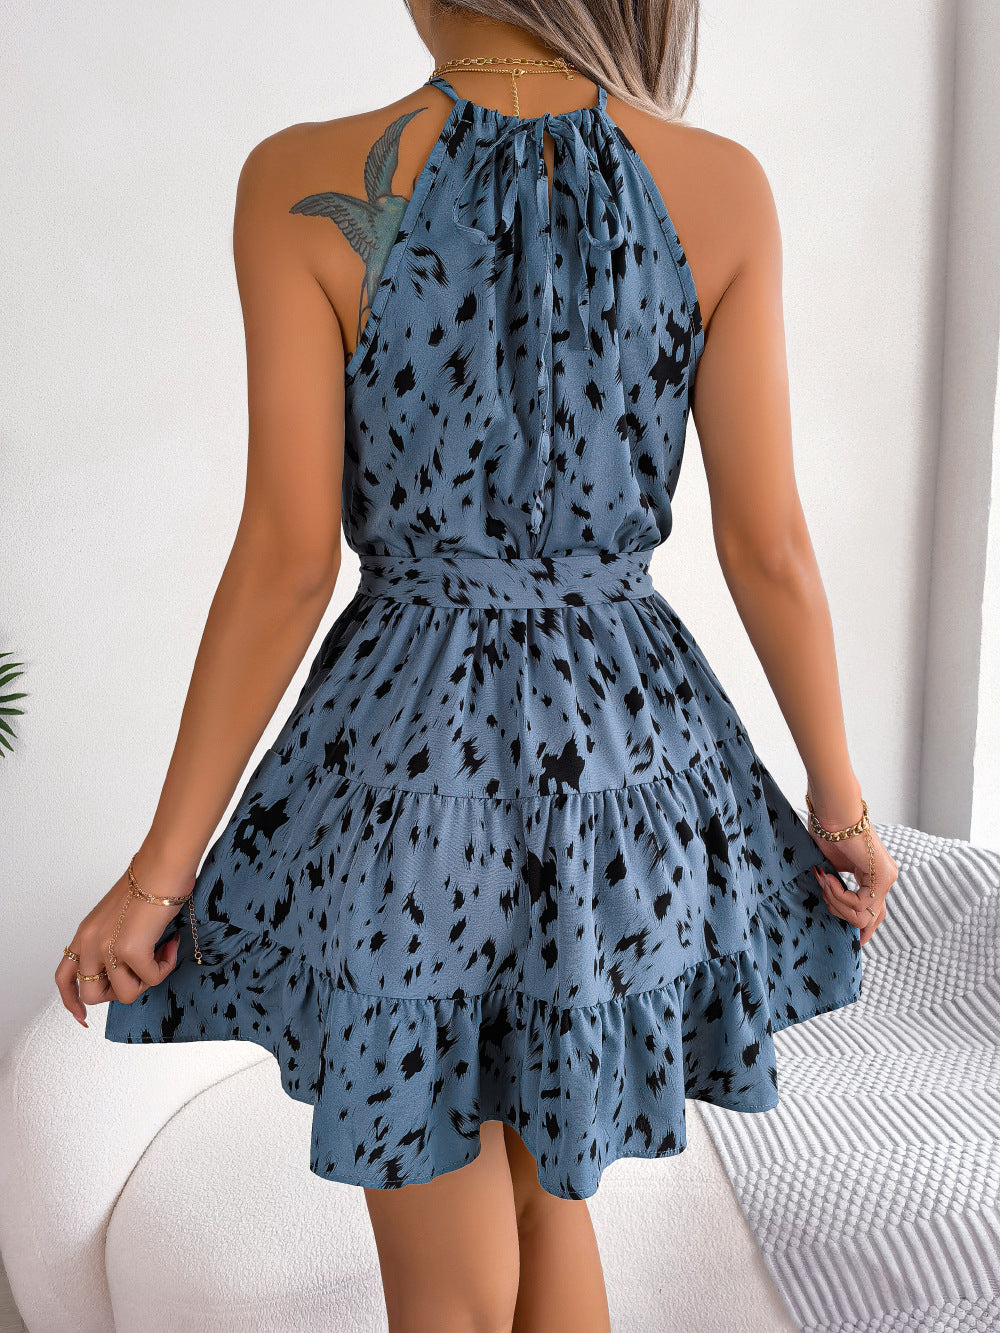 Stylish and Comfortable Leopard Print Swing Dress for Women - Antoniette Apparel